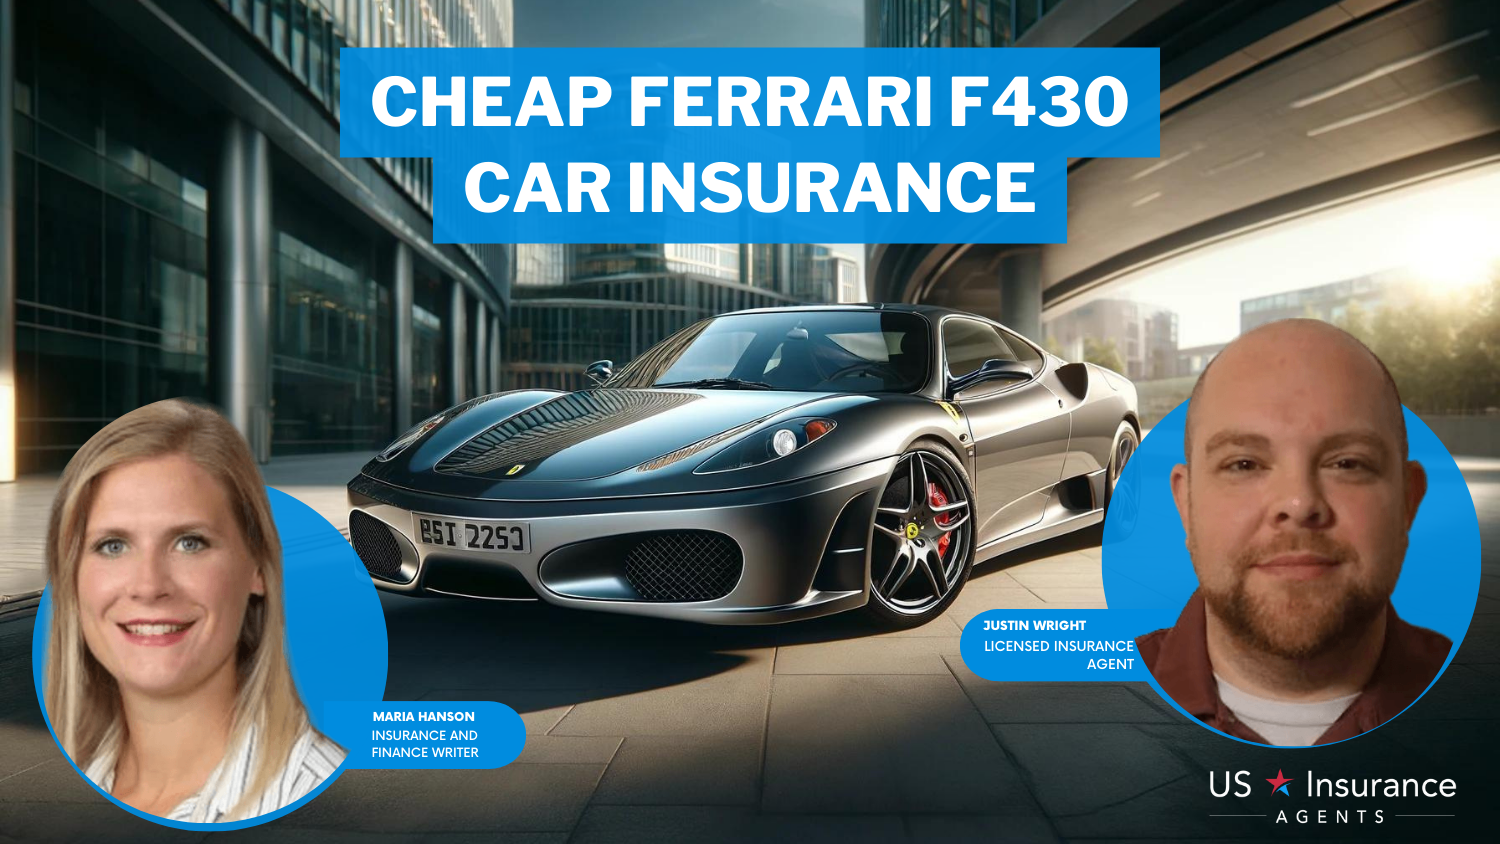 Allstate: cheap Ferrari F430 car insurance, auto insurance